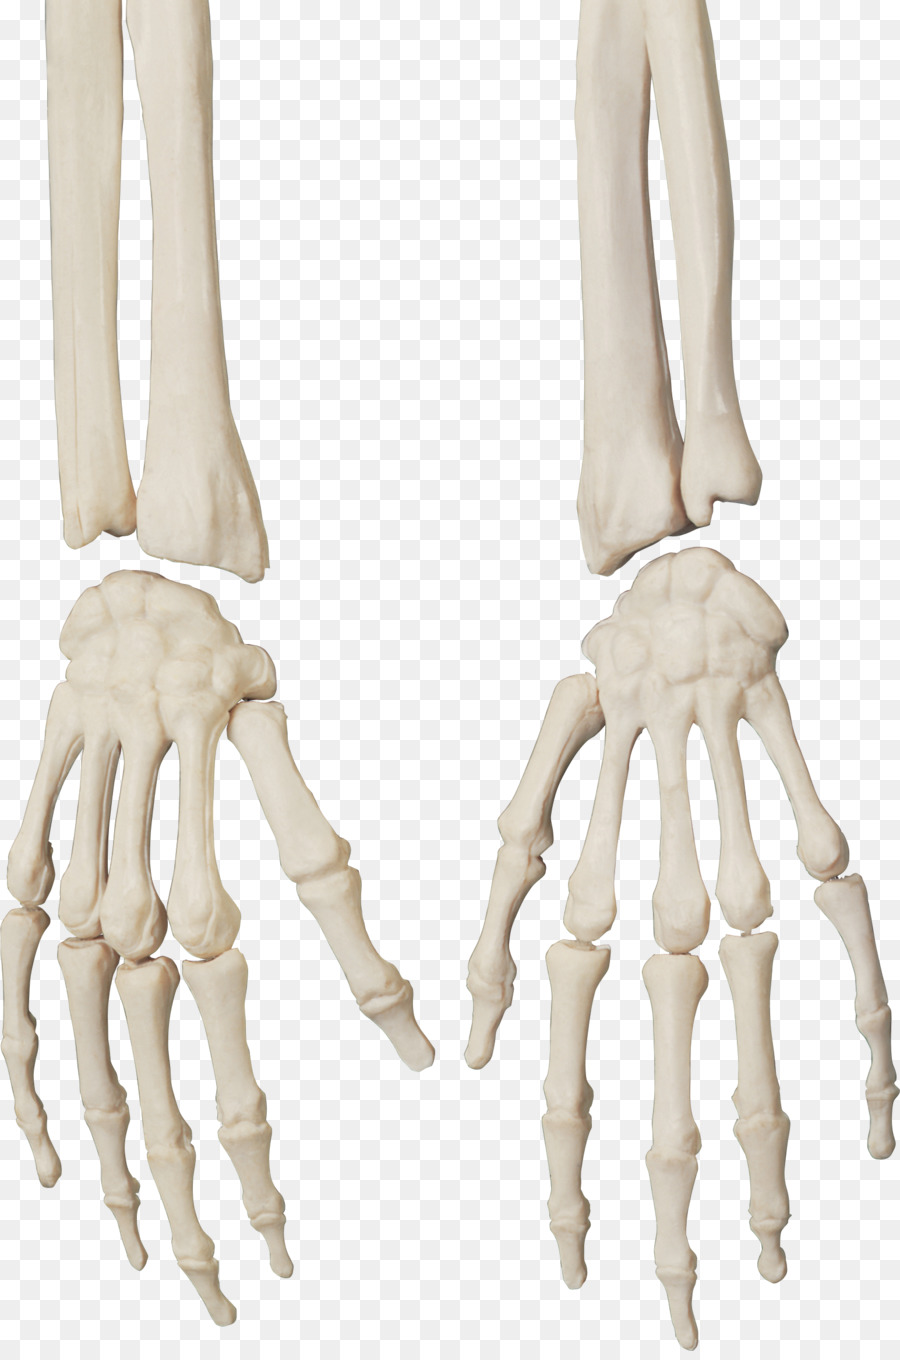 Human skeleton Bone Skull - bones png download - 1545*2320 - Free Transparent Skeleton png Download.